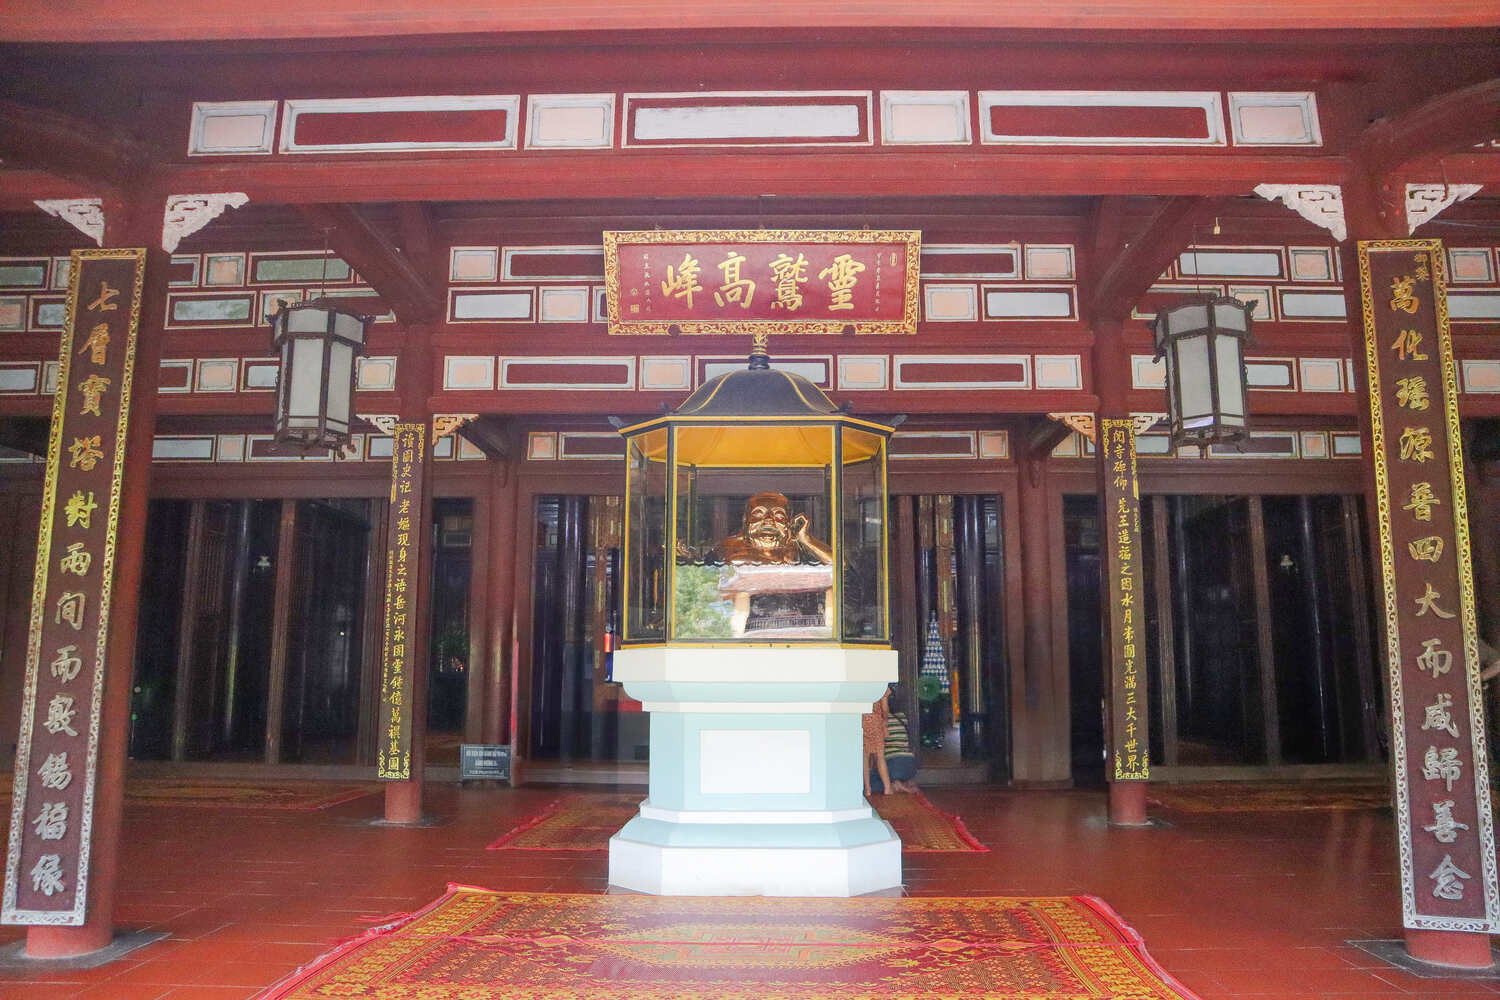 Inside the Thien Mu Pagoda Hue